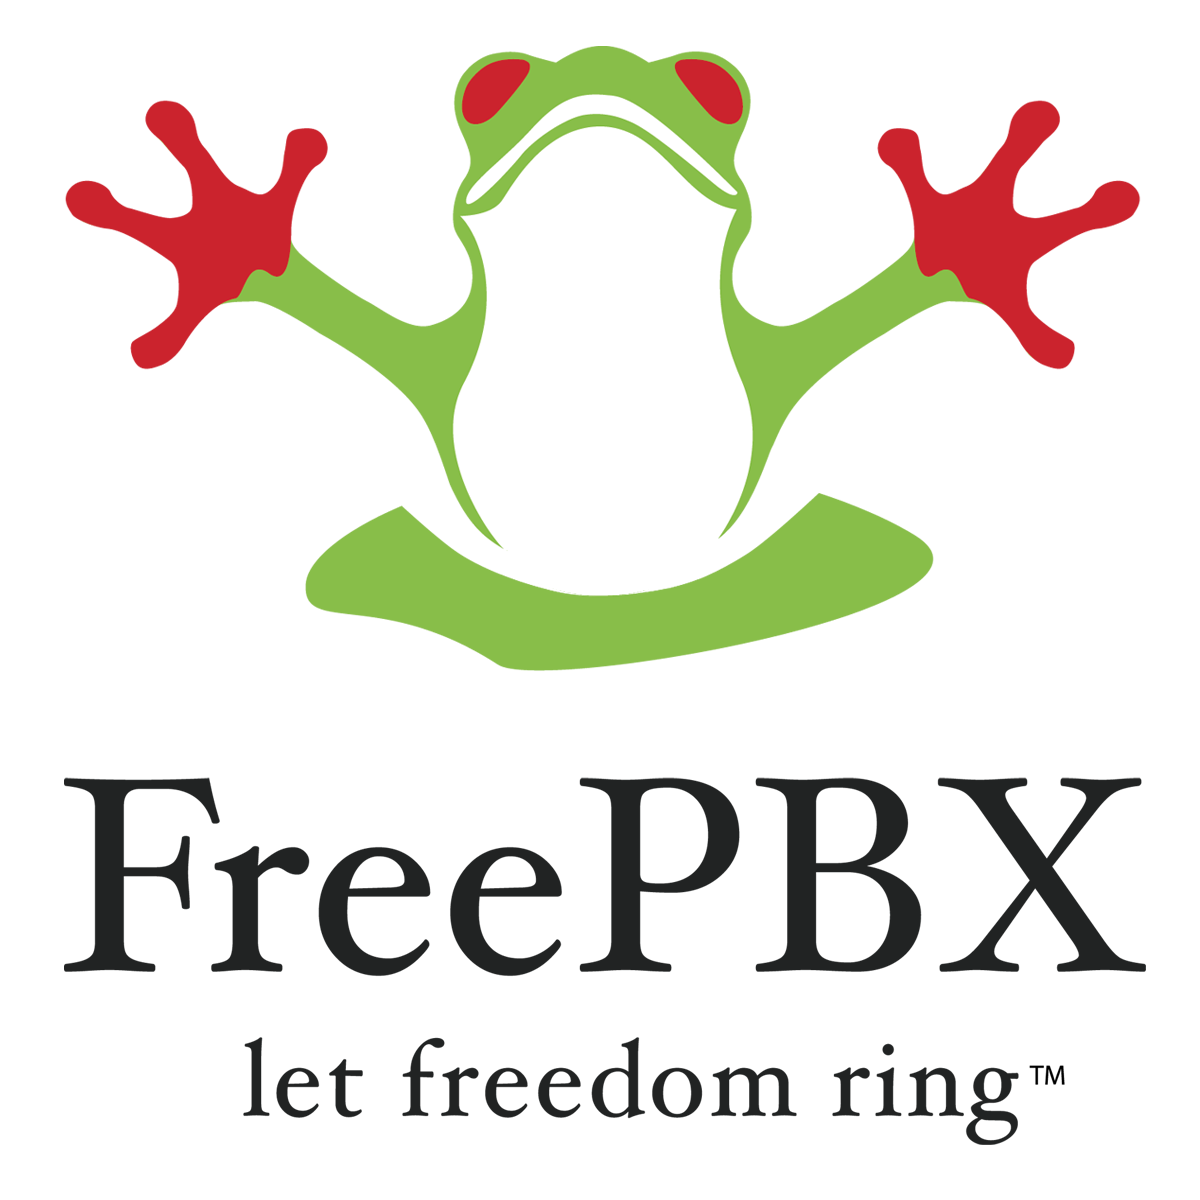 Freepbx distro. FREEPBX. FREEPBX логотип. Asterisk FREEPBX. Asterisk FREEPBX logo.